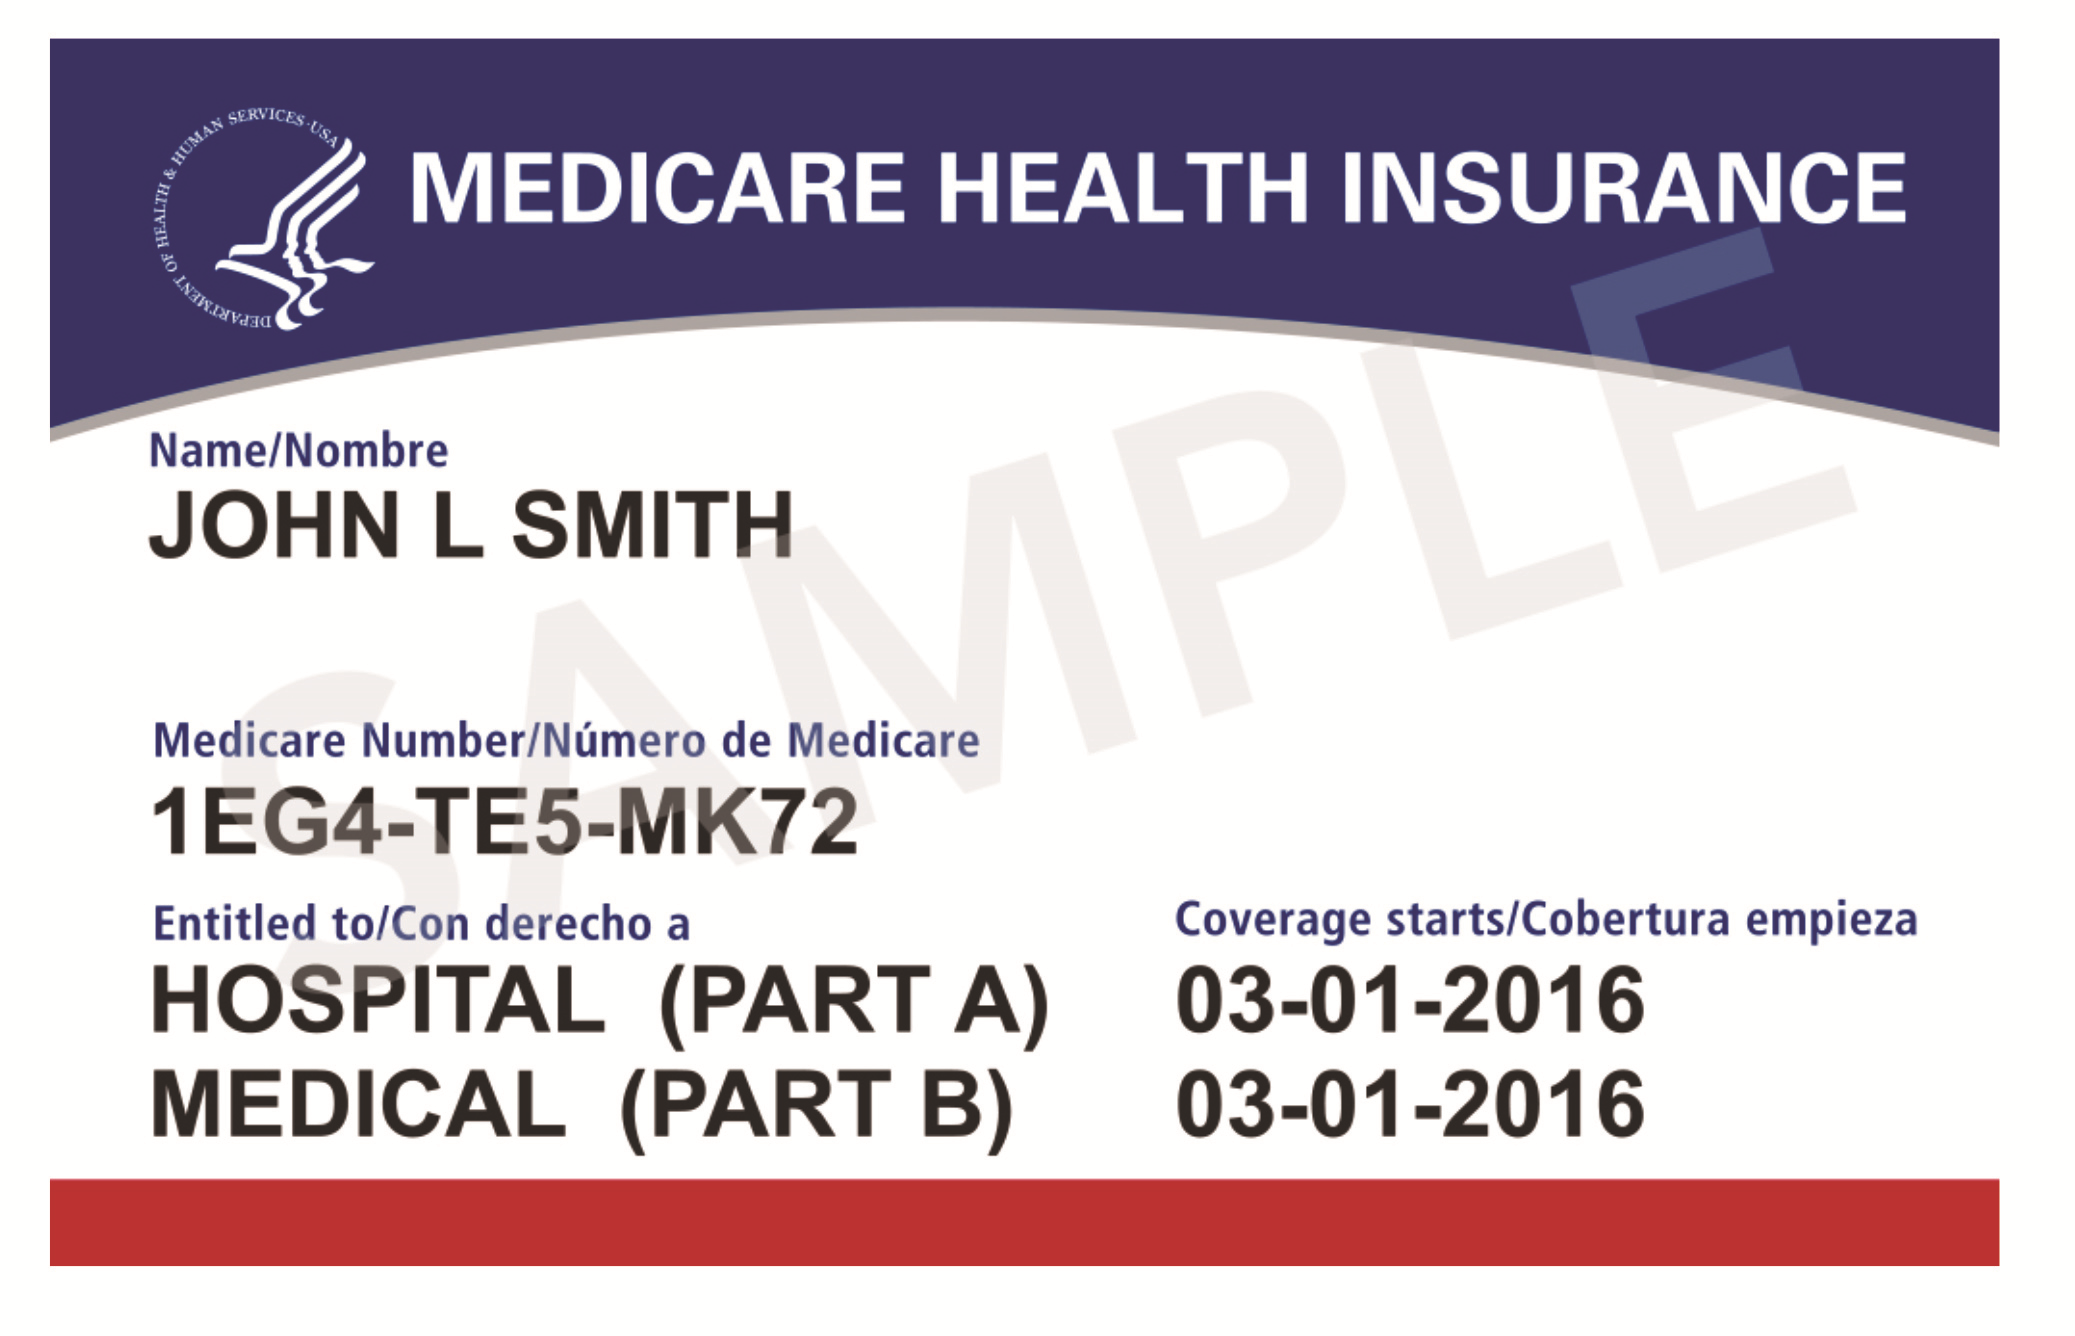 Sample Medicare health insurance card image